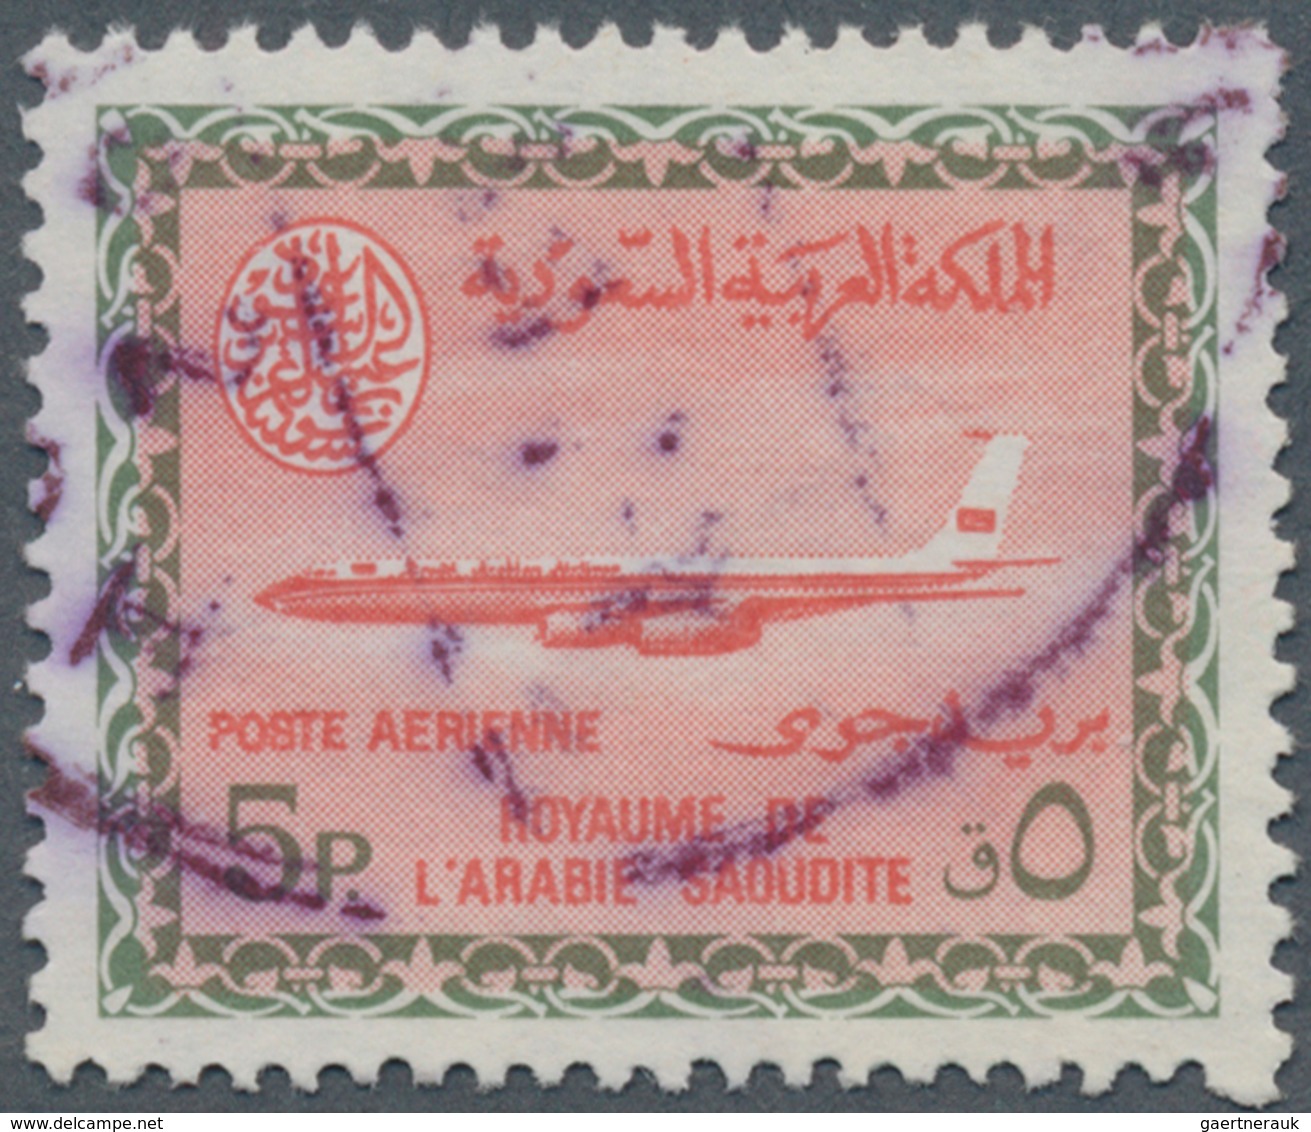 Saudi-Arabien: 1972, Airmail 5 Pia., Used, Great Rarity, Provenience: Filatco (SG 589, Scott C37). - Saudi Arabia